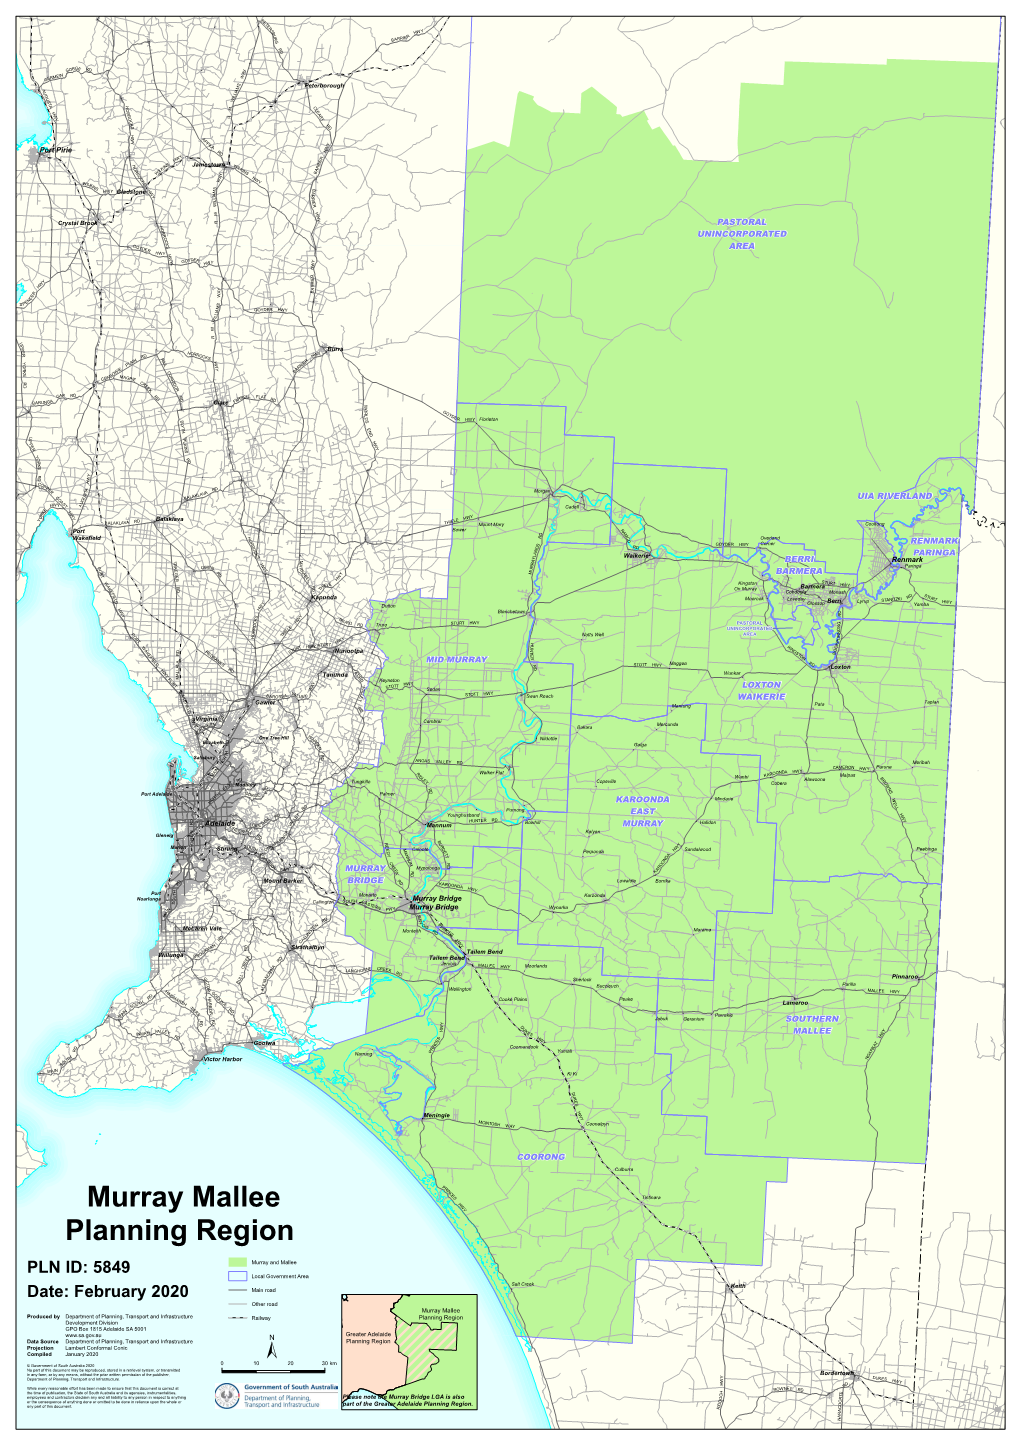 Murray Mallee Planning Region